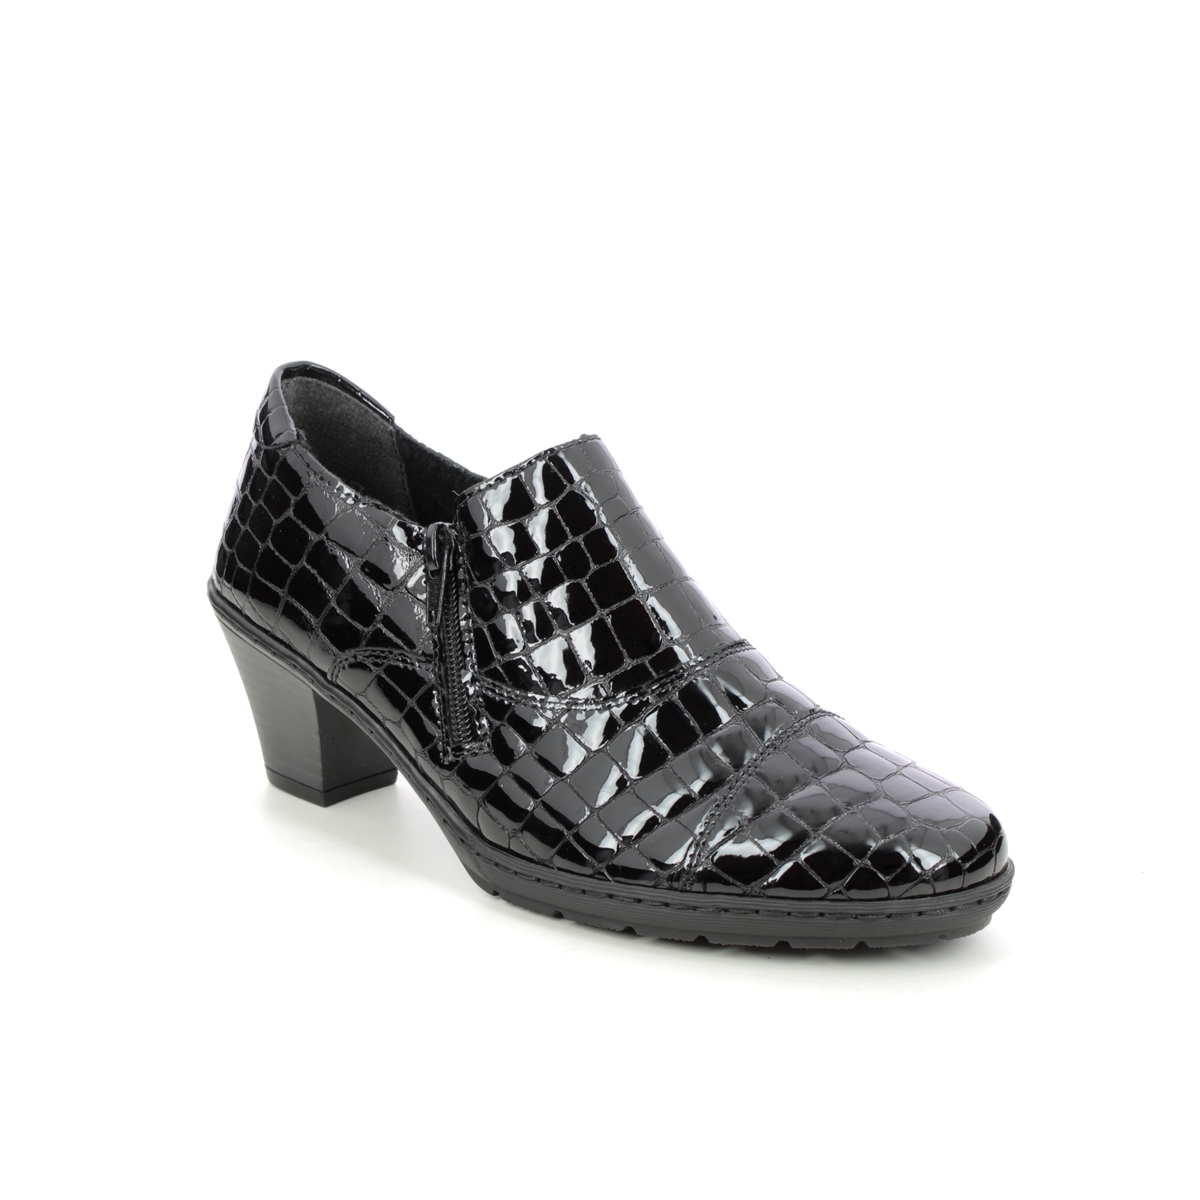 Rieker Addicap Black Croc Womens Shoe-Boots 57173-03 In Size 41 In Plain Black Croc Effect